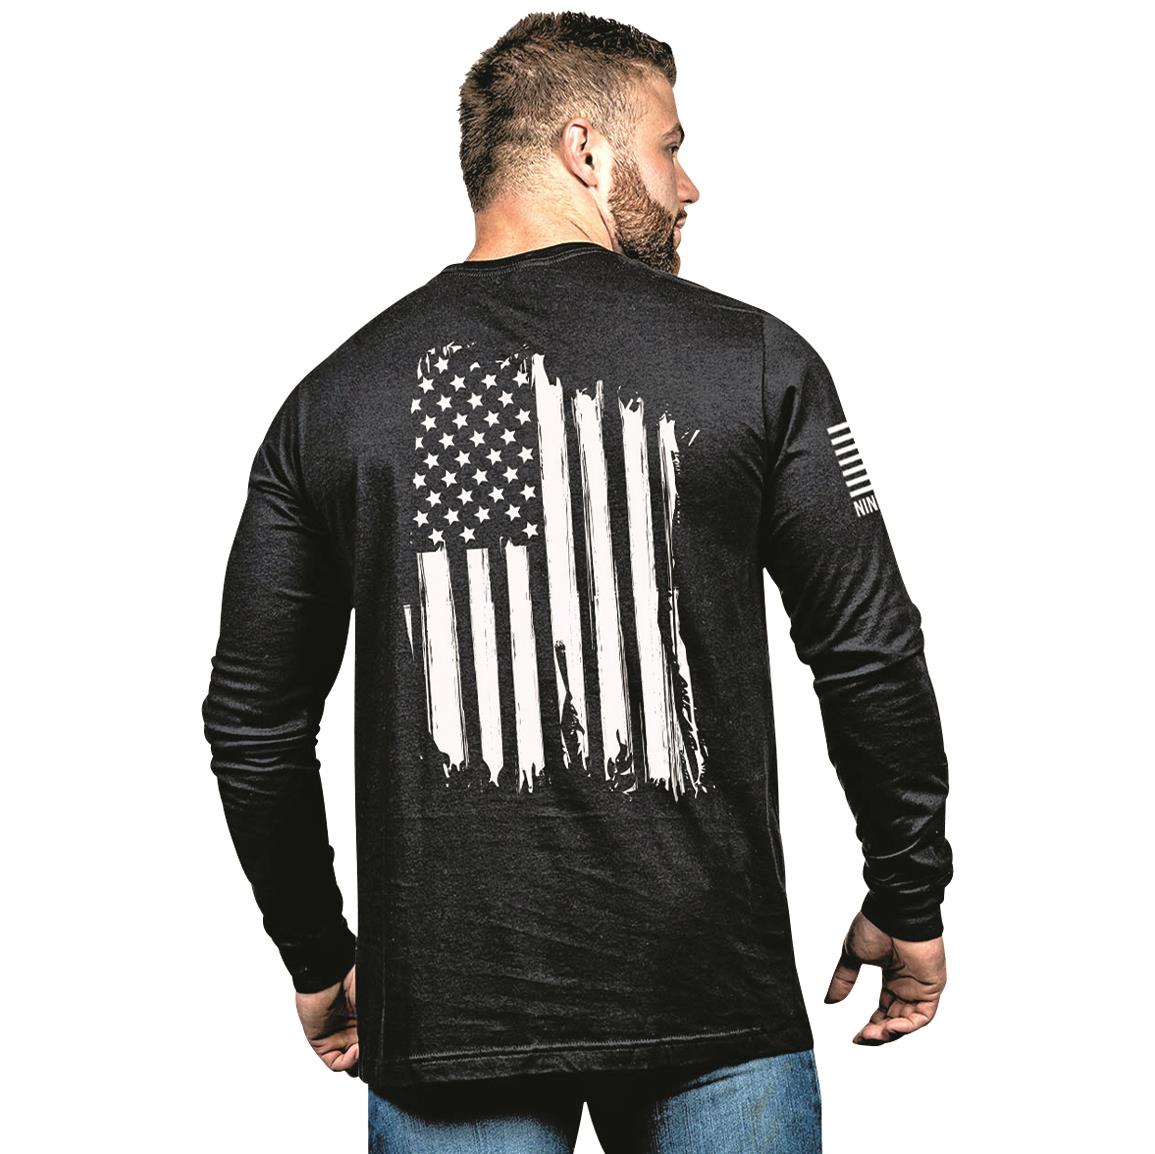 Nine Line America Long-sleeved T-shirt, Black